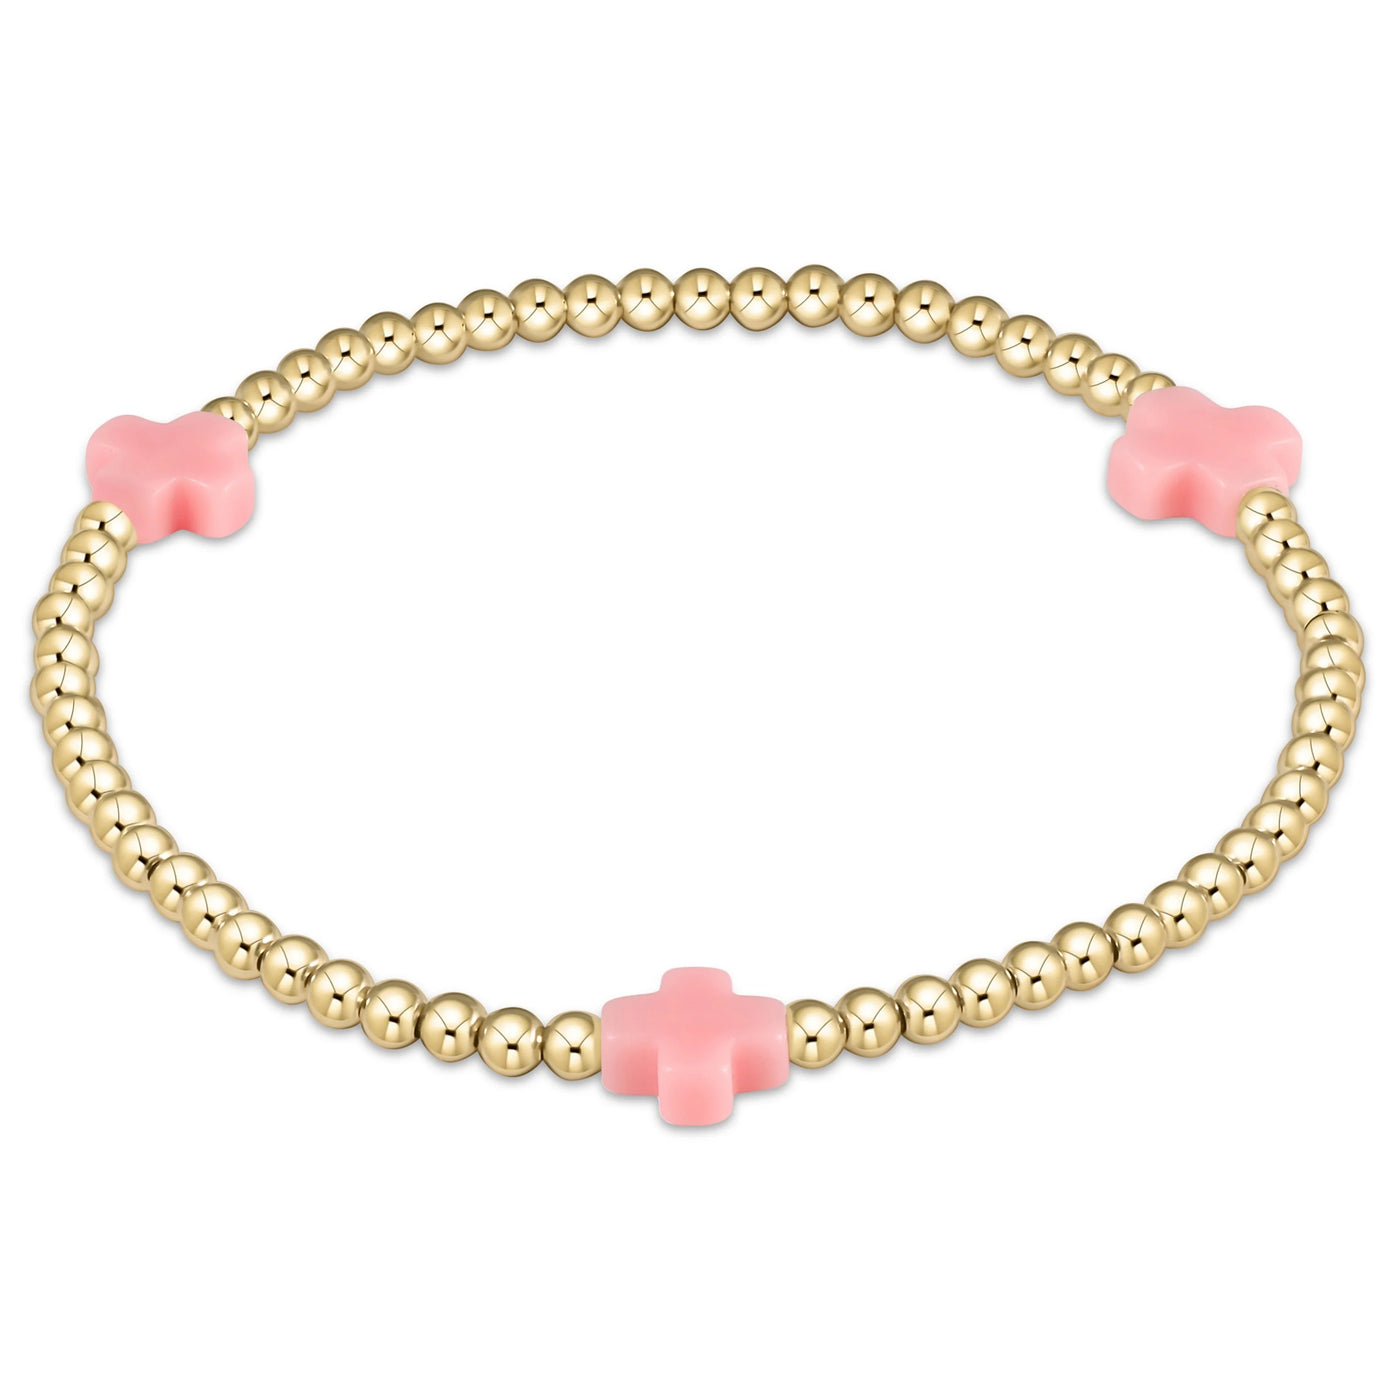 Enewton signature cross gold pattern 3mm bead bracelet - pink